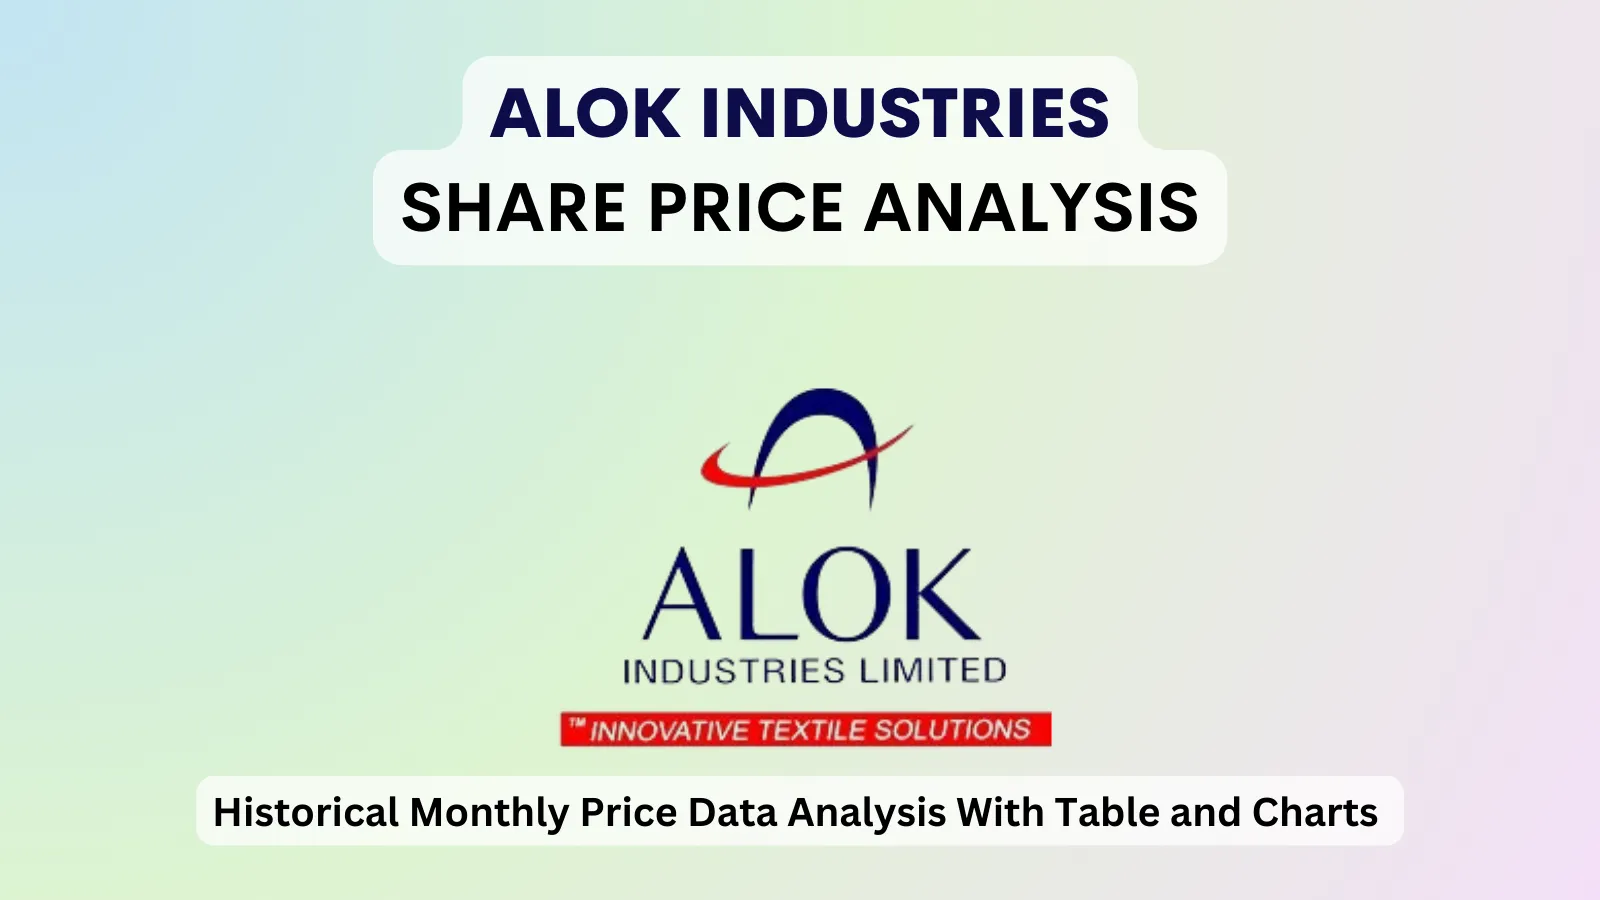 Alok industries share price analysis